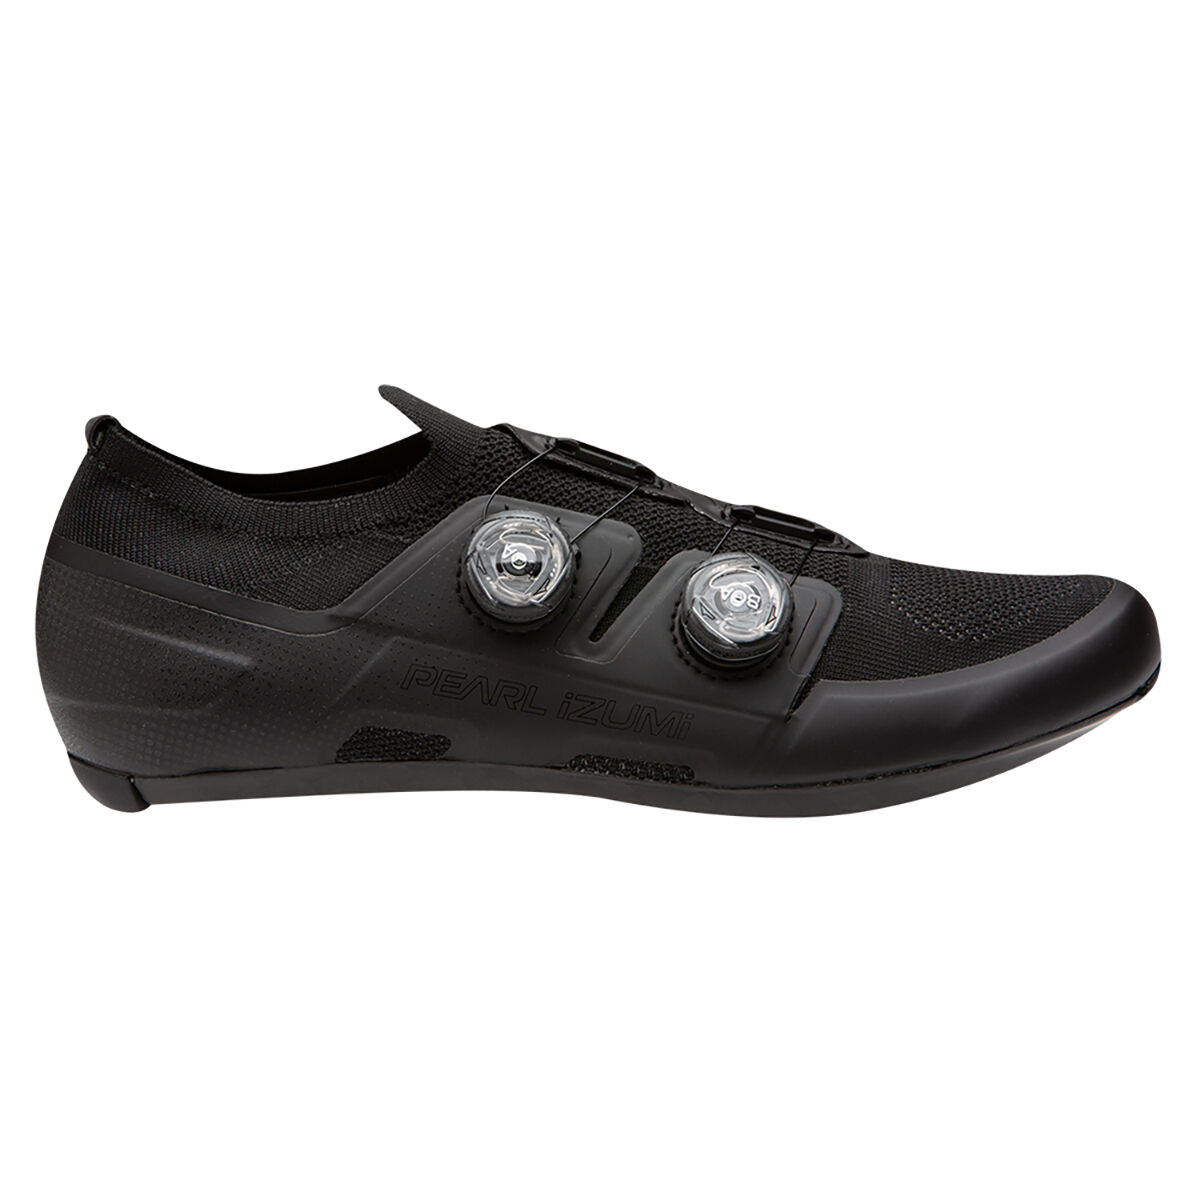 Pearl Izumi Pro Road V5 - Cycling shoes - Men's